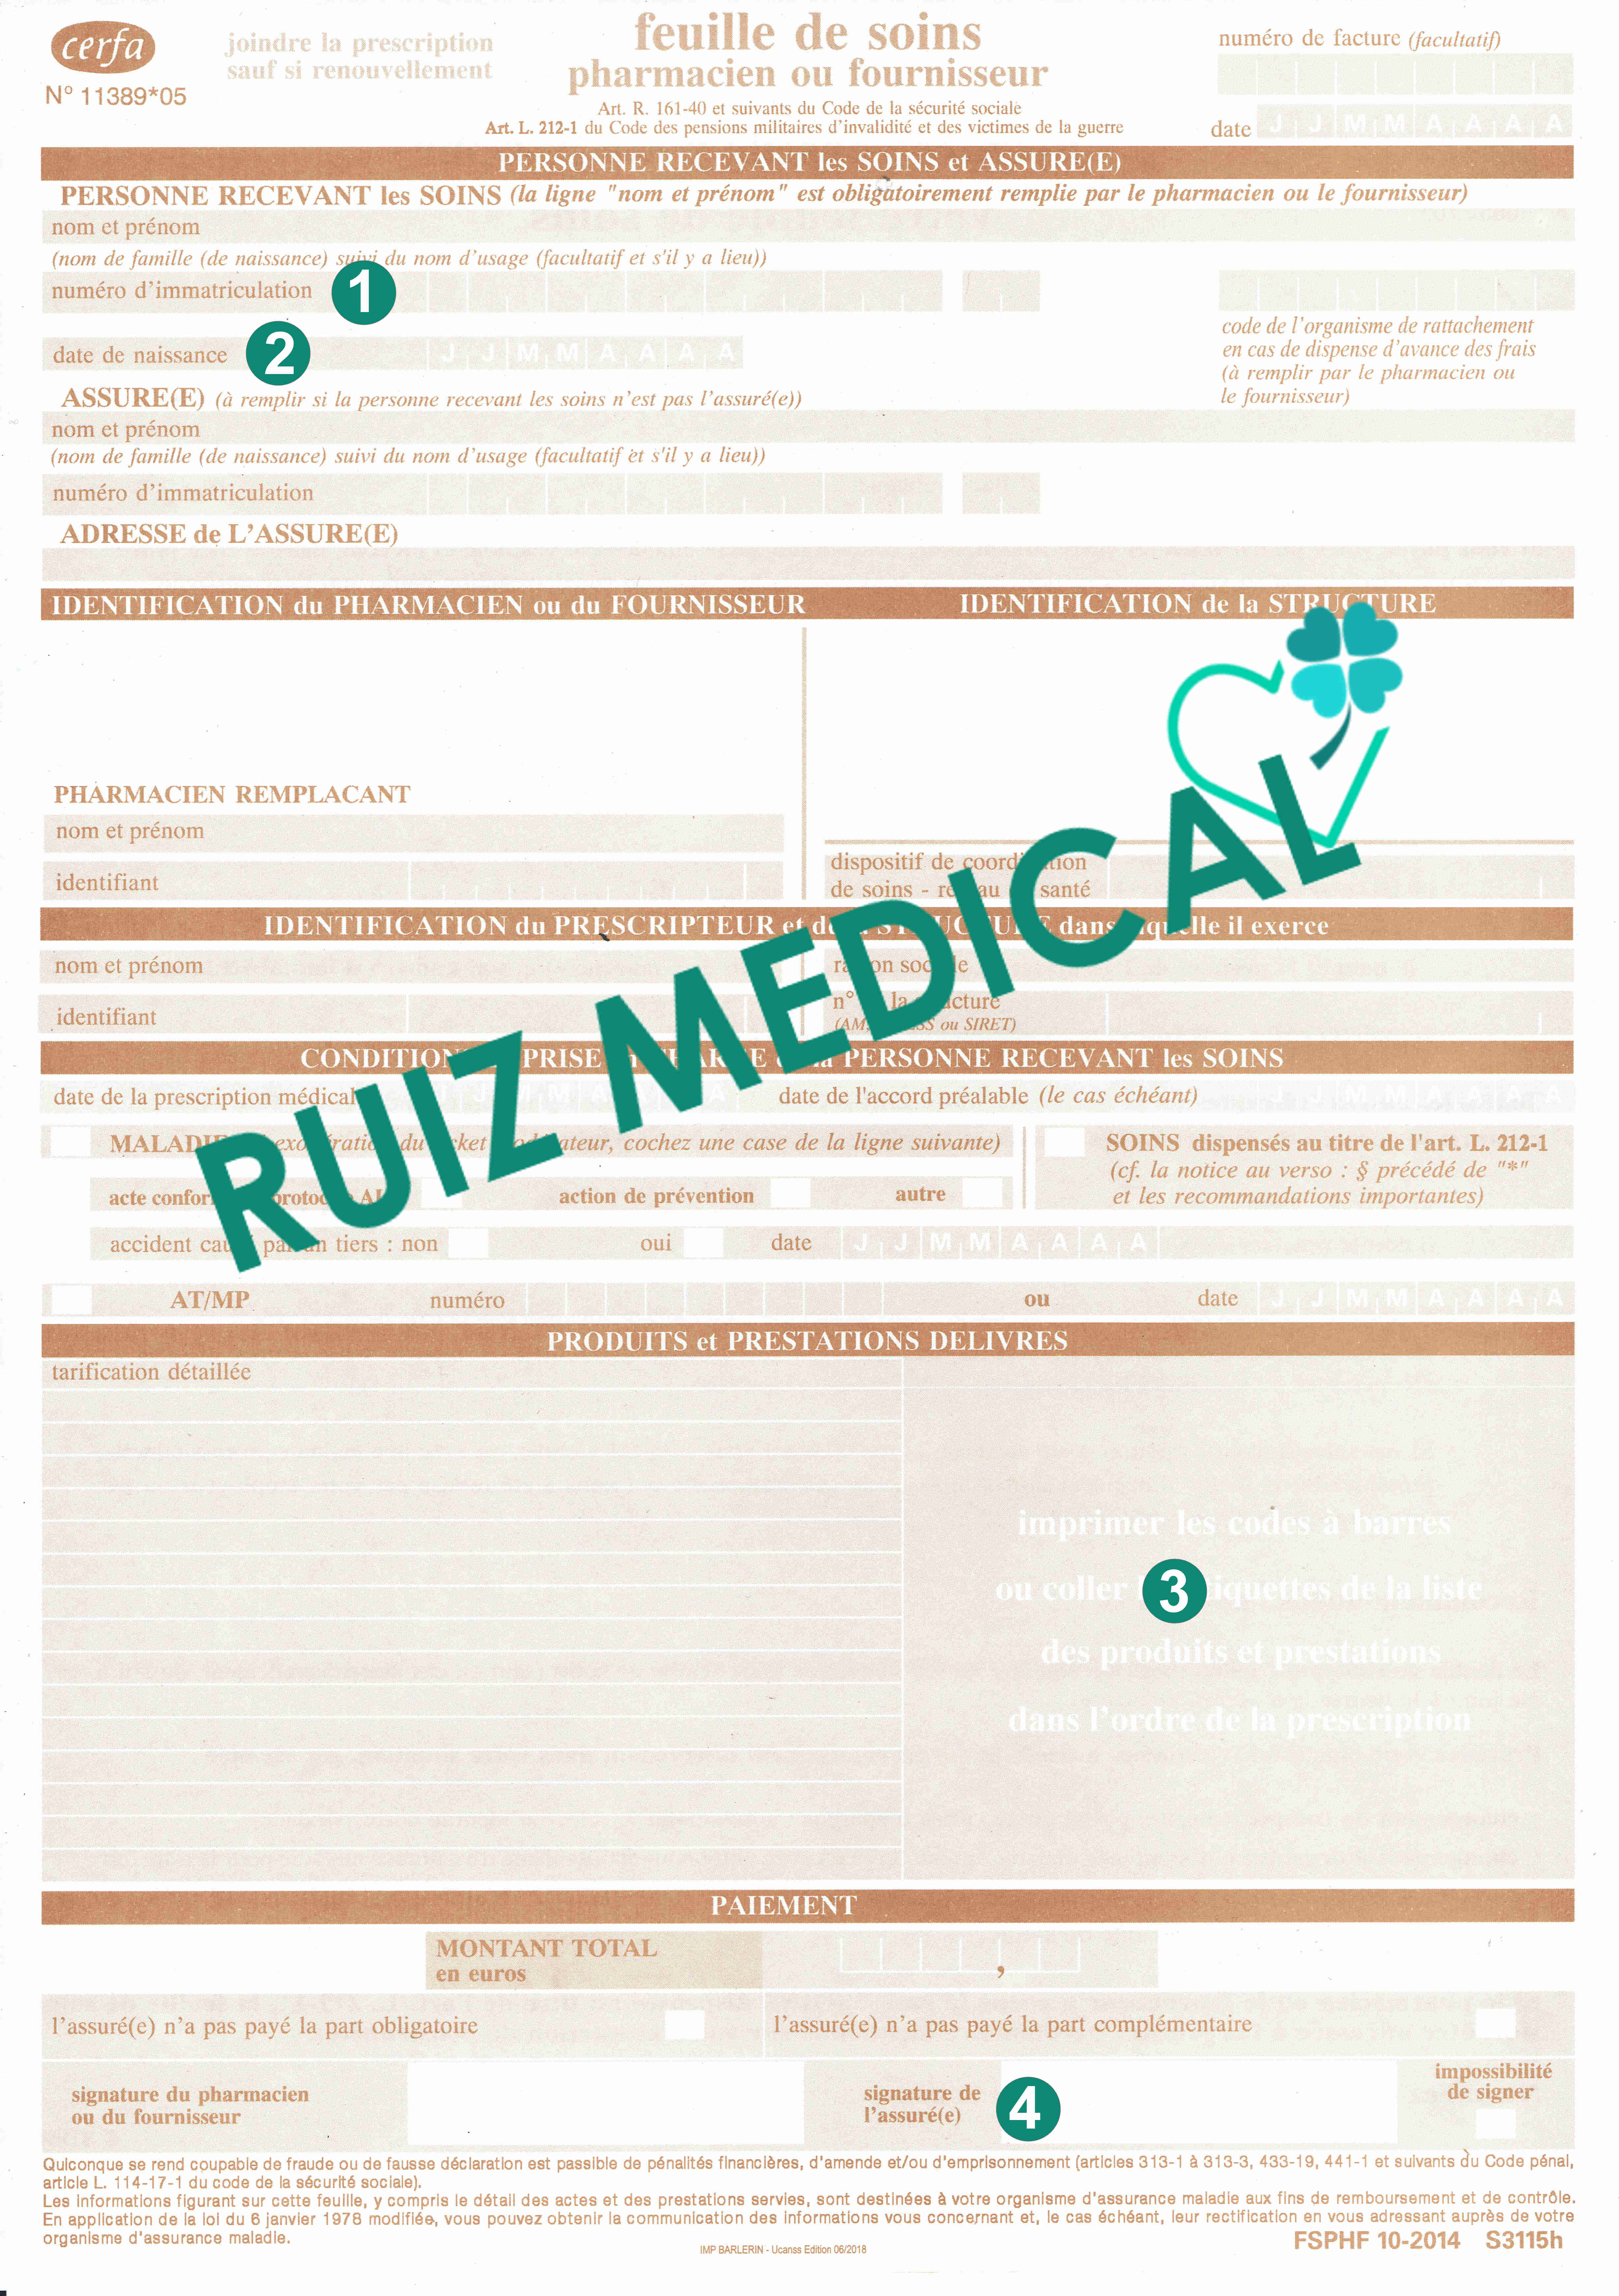 Feuille de soins Ruizmedical.com